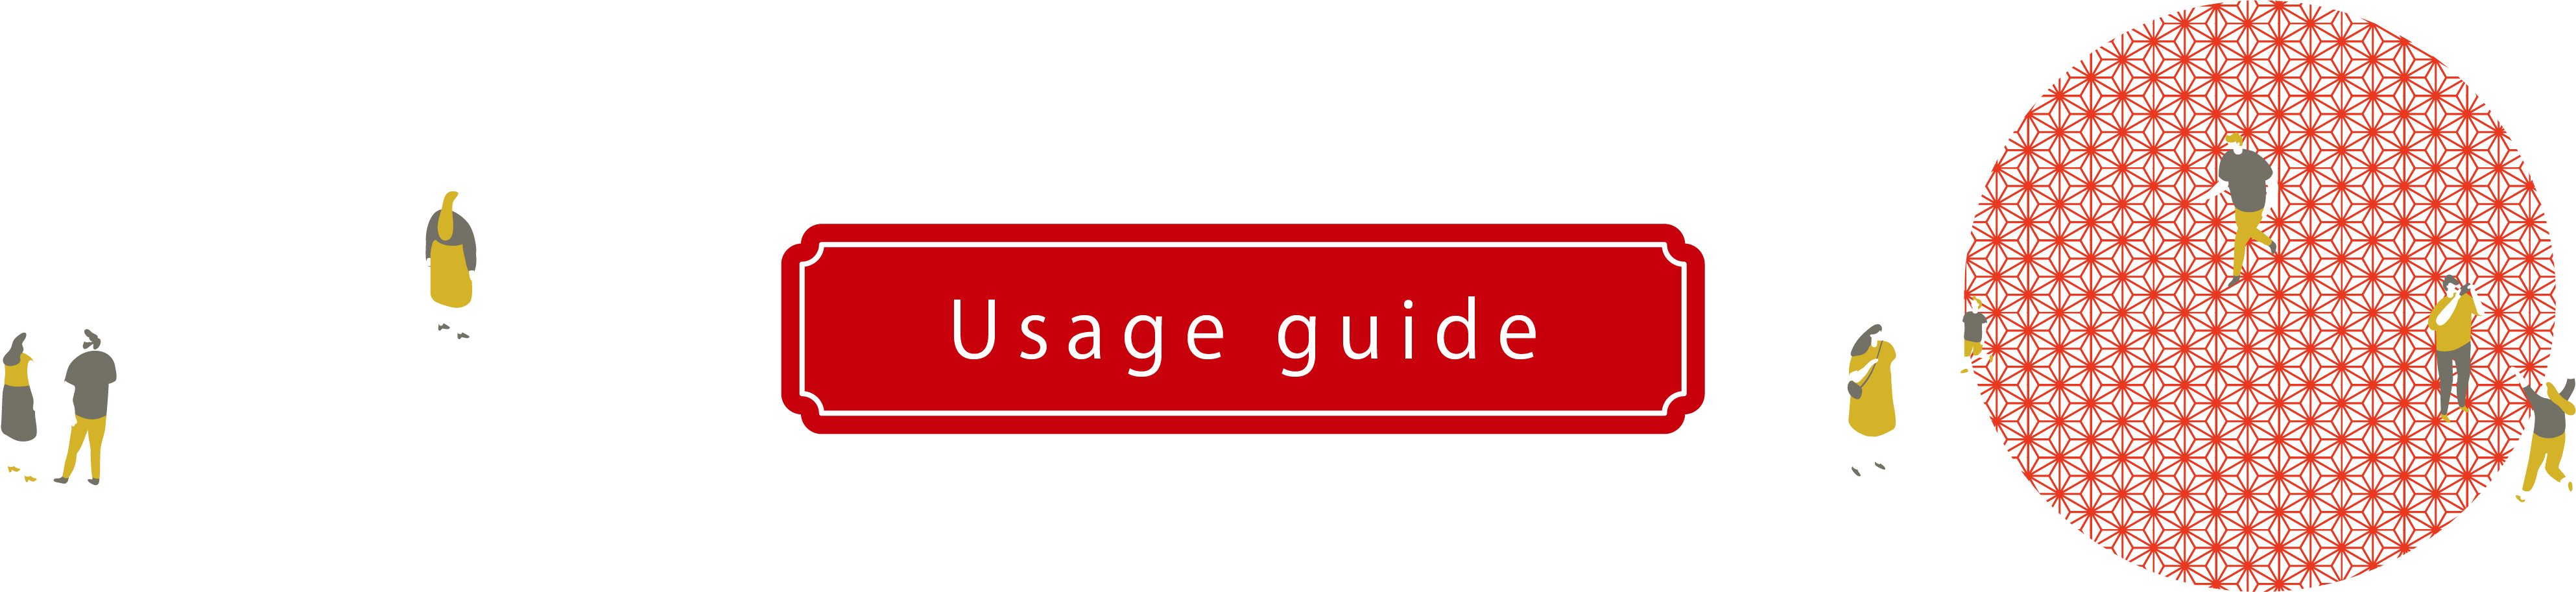 Usage guide